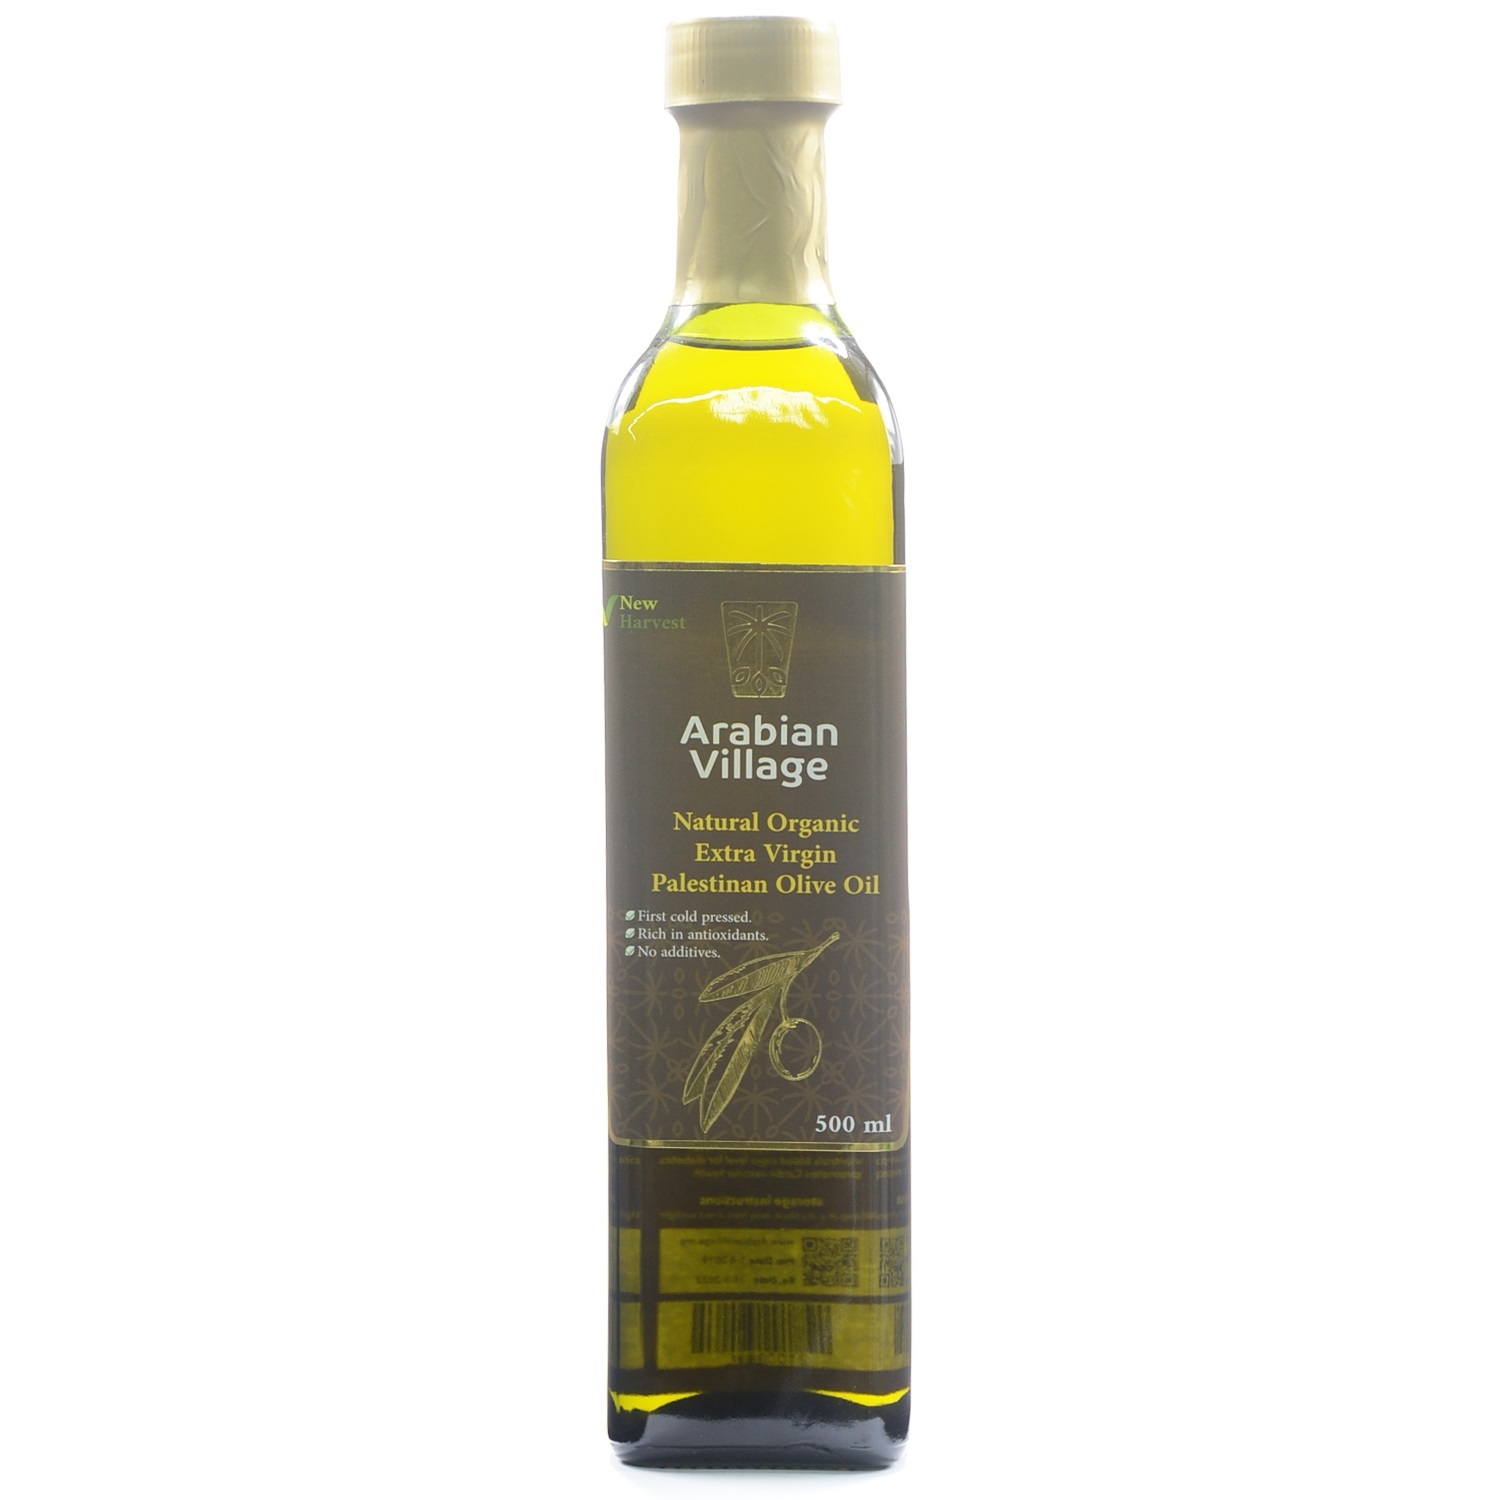 Natural-organic-extra-virgin-palestinian-olive-oil-500ml